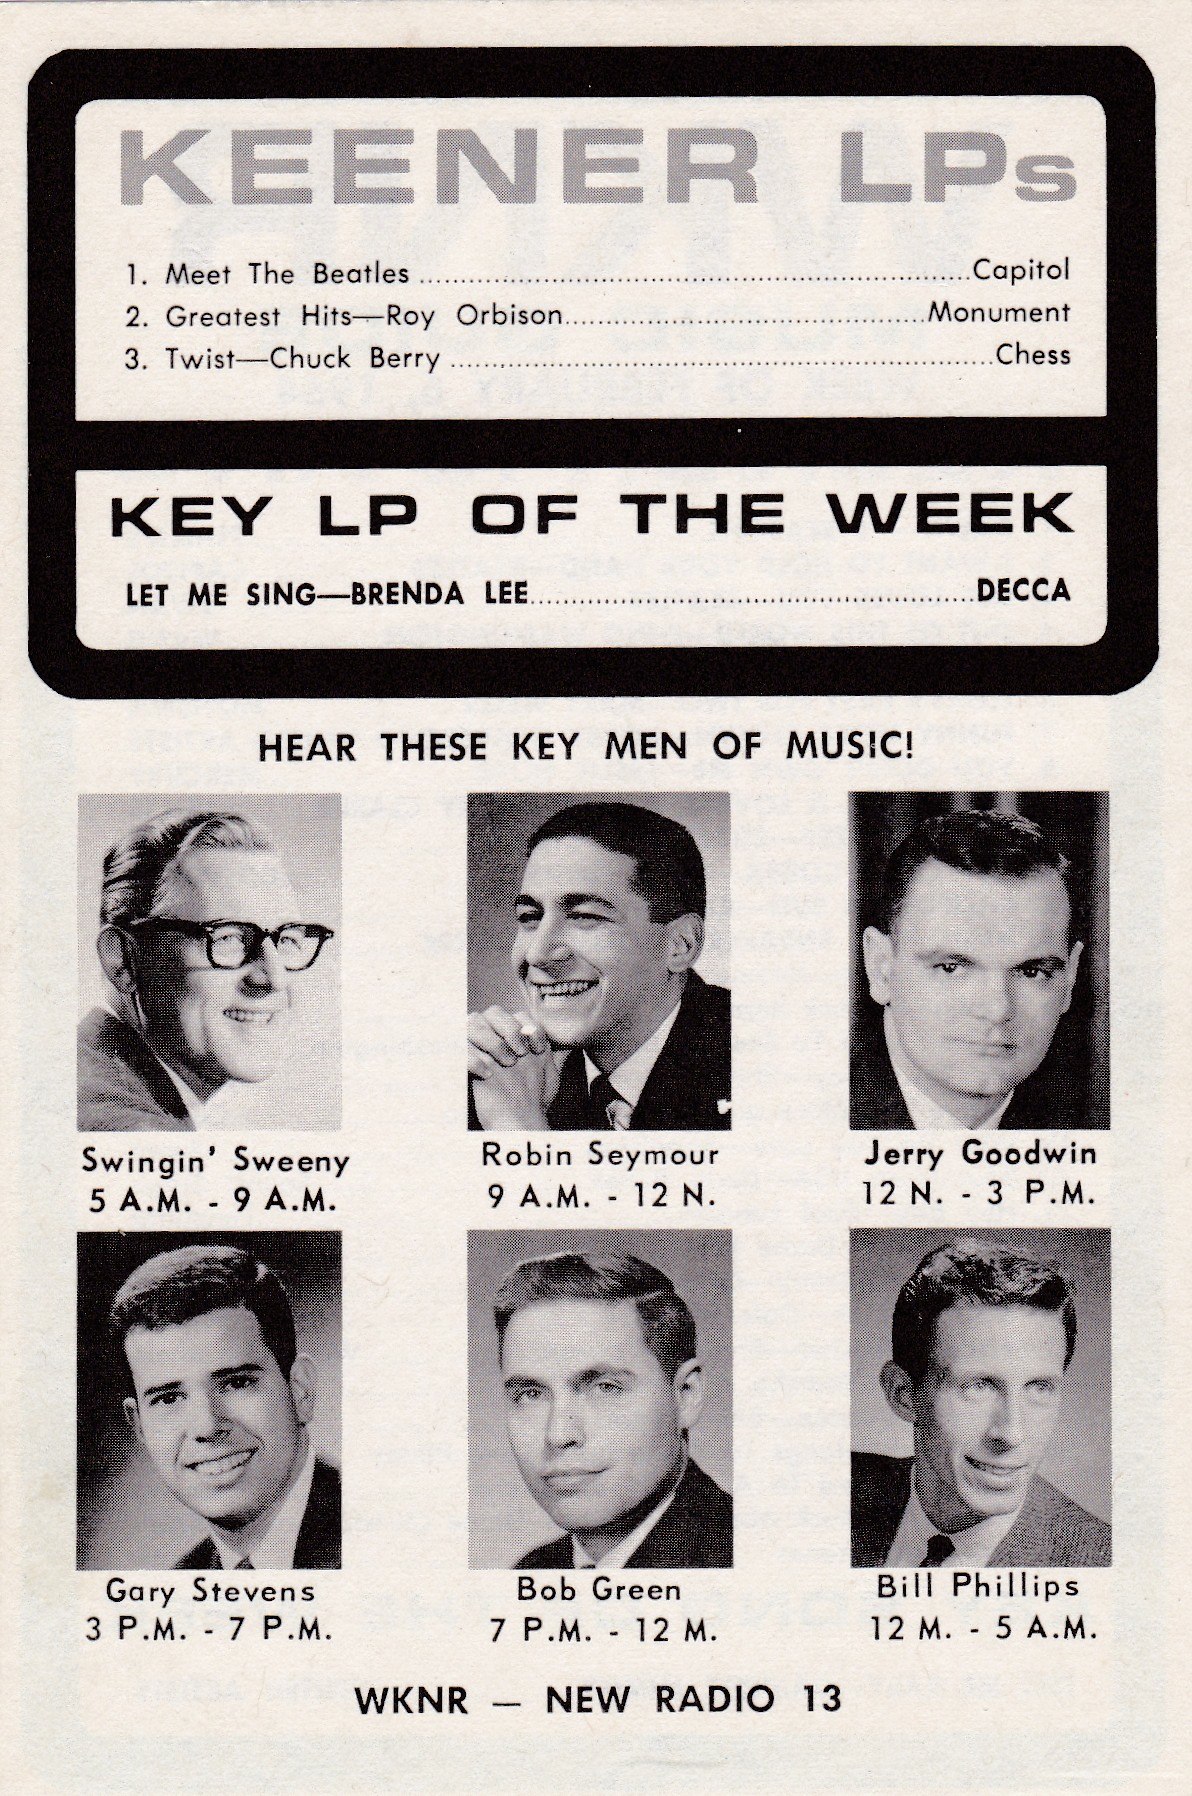 WKNR SURVEY FEBRUARY 6, 1964 - BACK